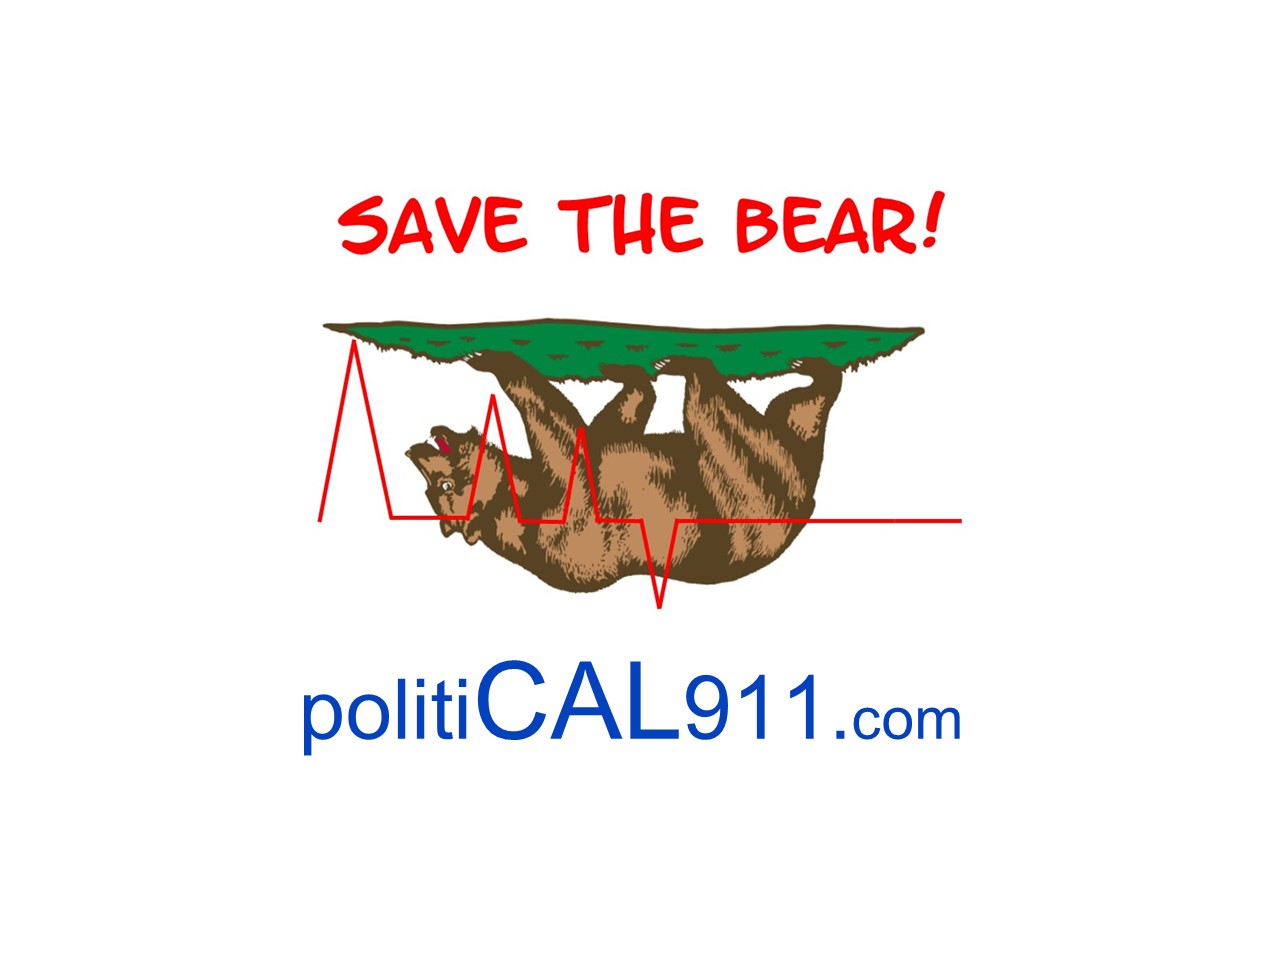 Launch of New Political Activism Website: politiCAL911.com